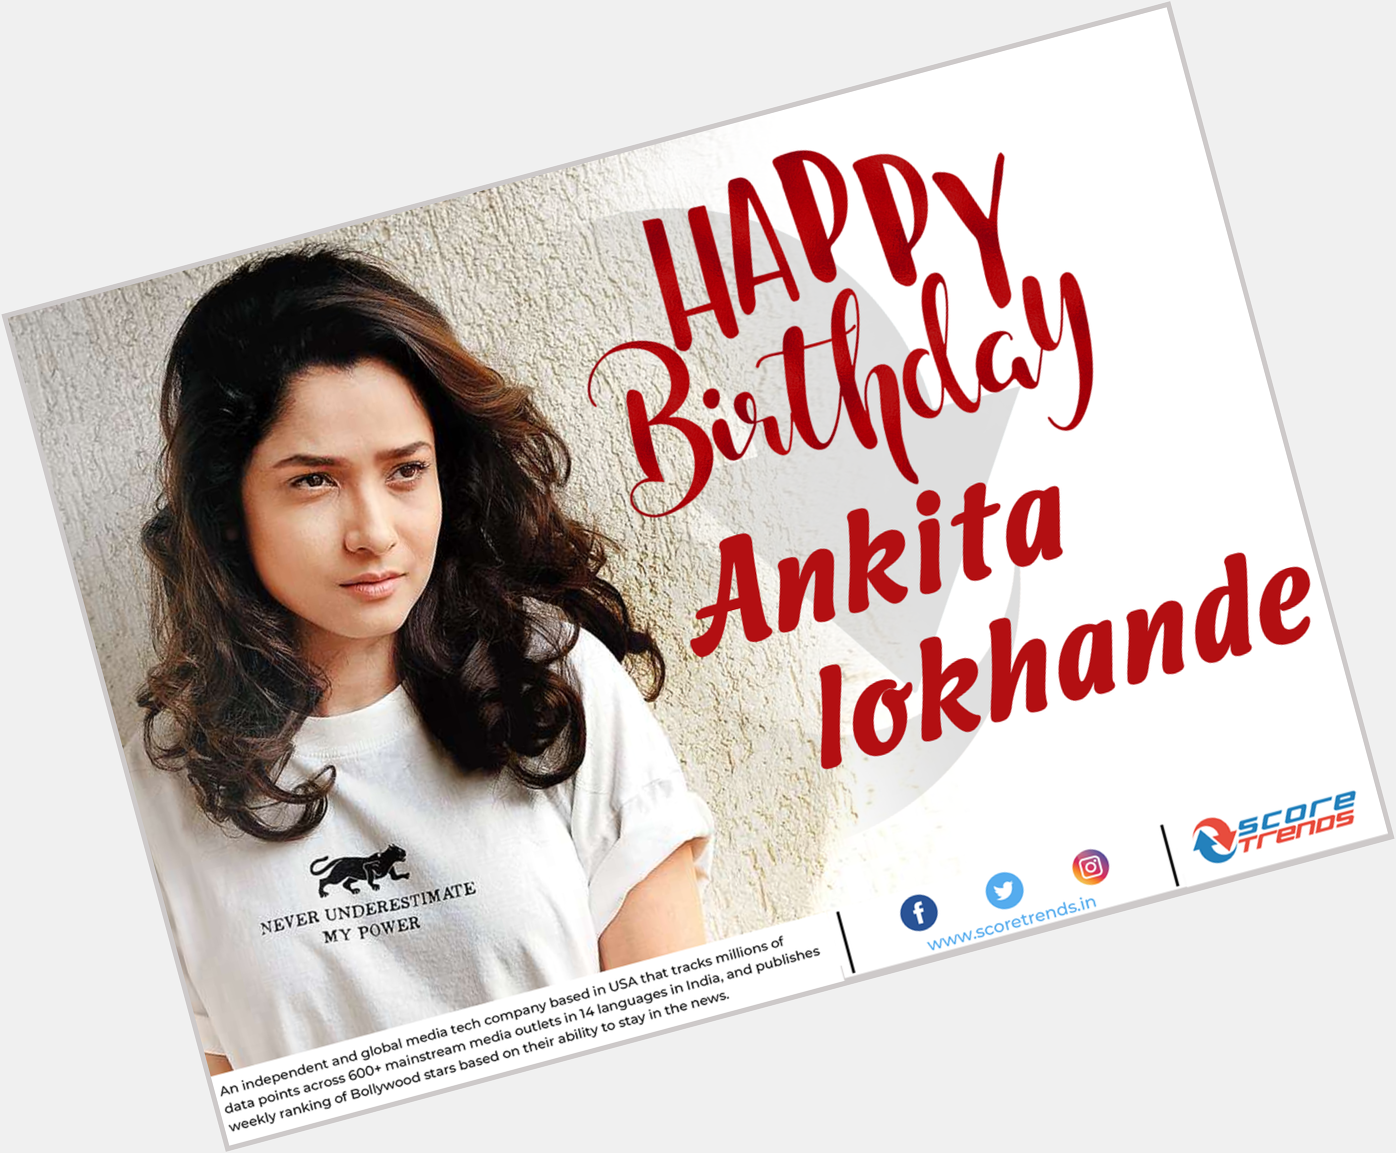 Score Trends wishes Ankita Lokhande a Happy Birthday!! 